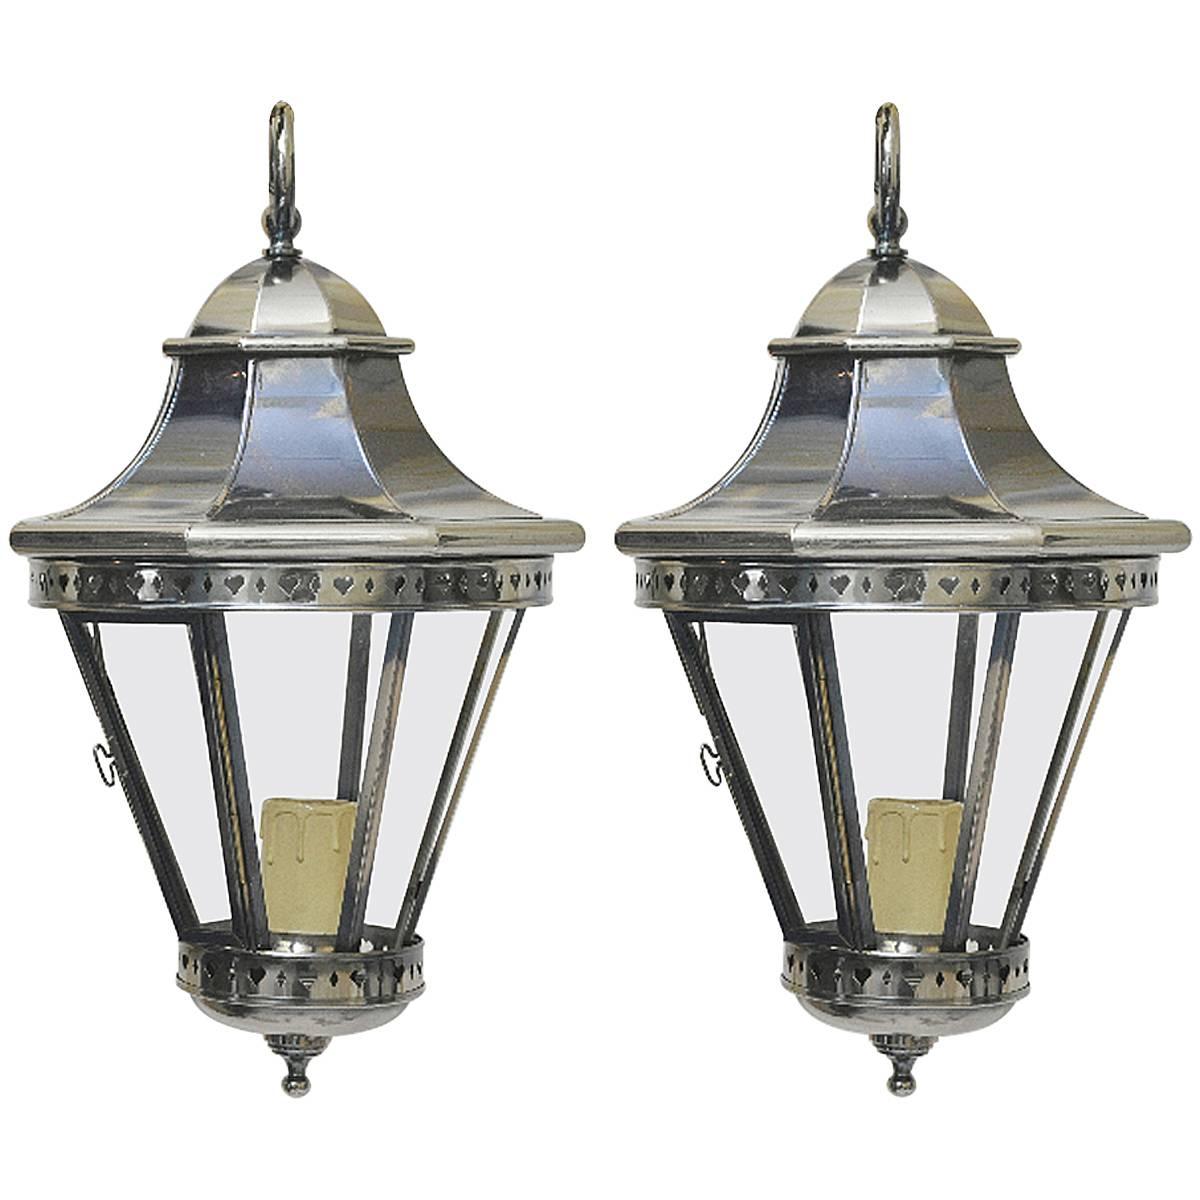 Pair of Vintage Polished Nickel Lanterns or Pendants For Sale